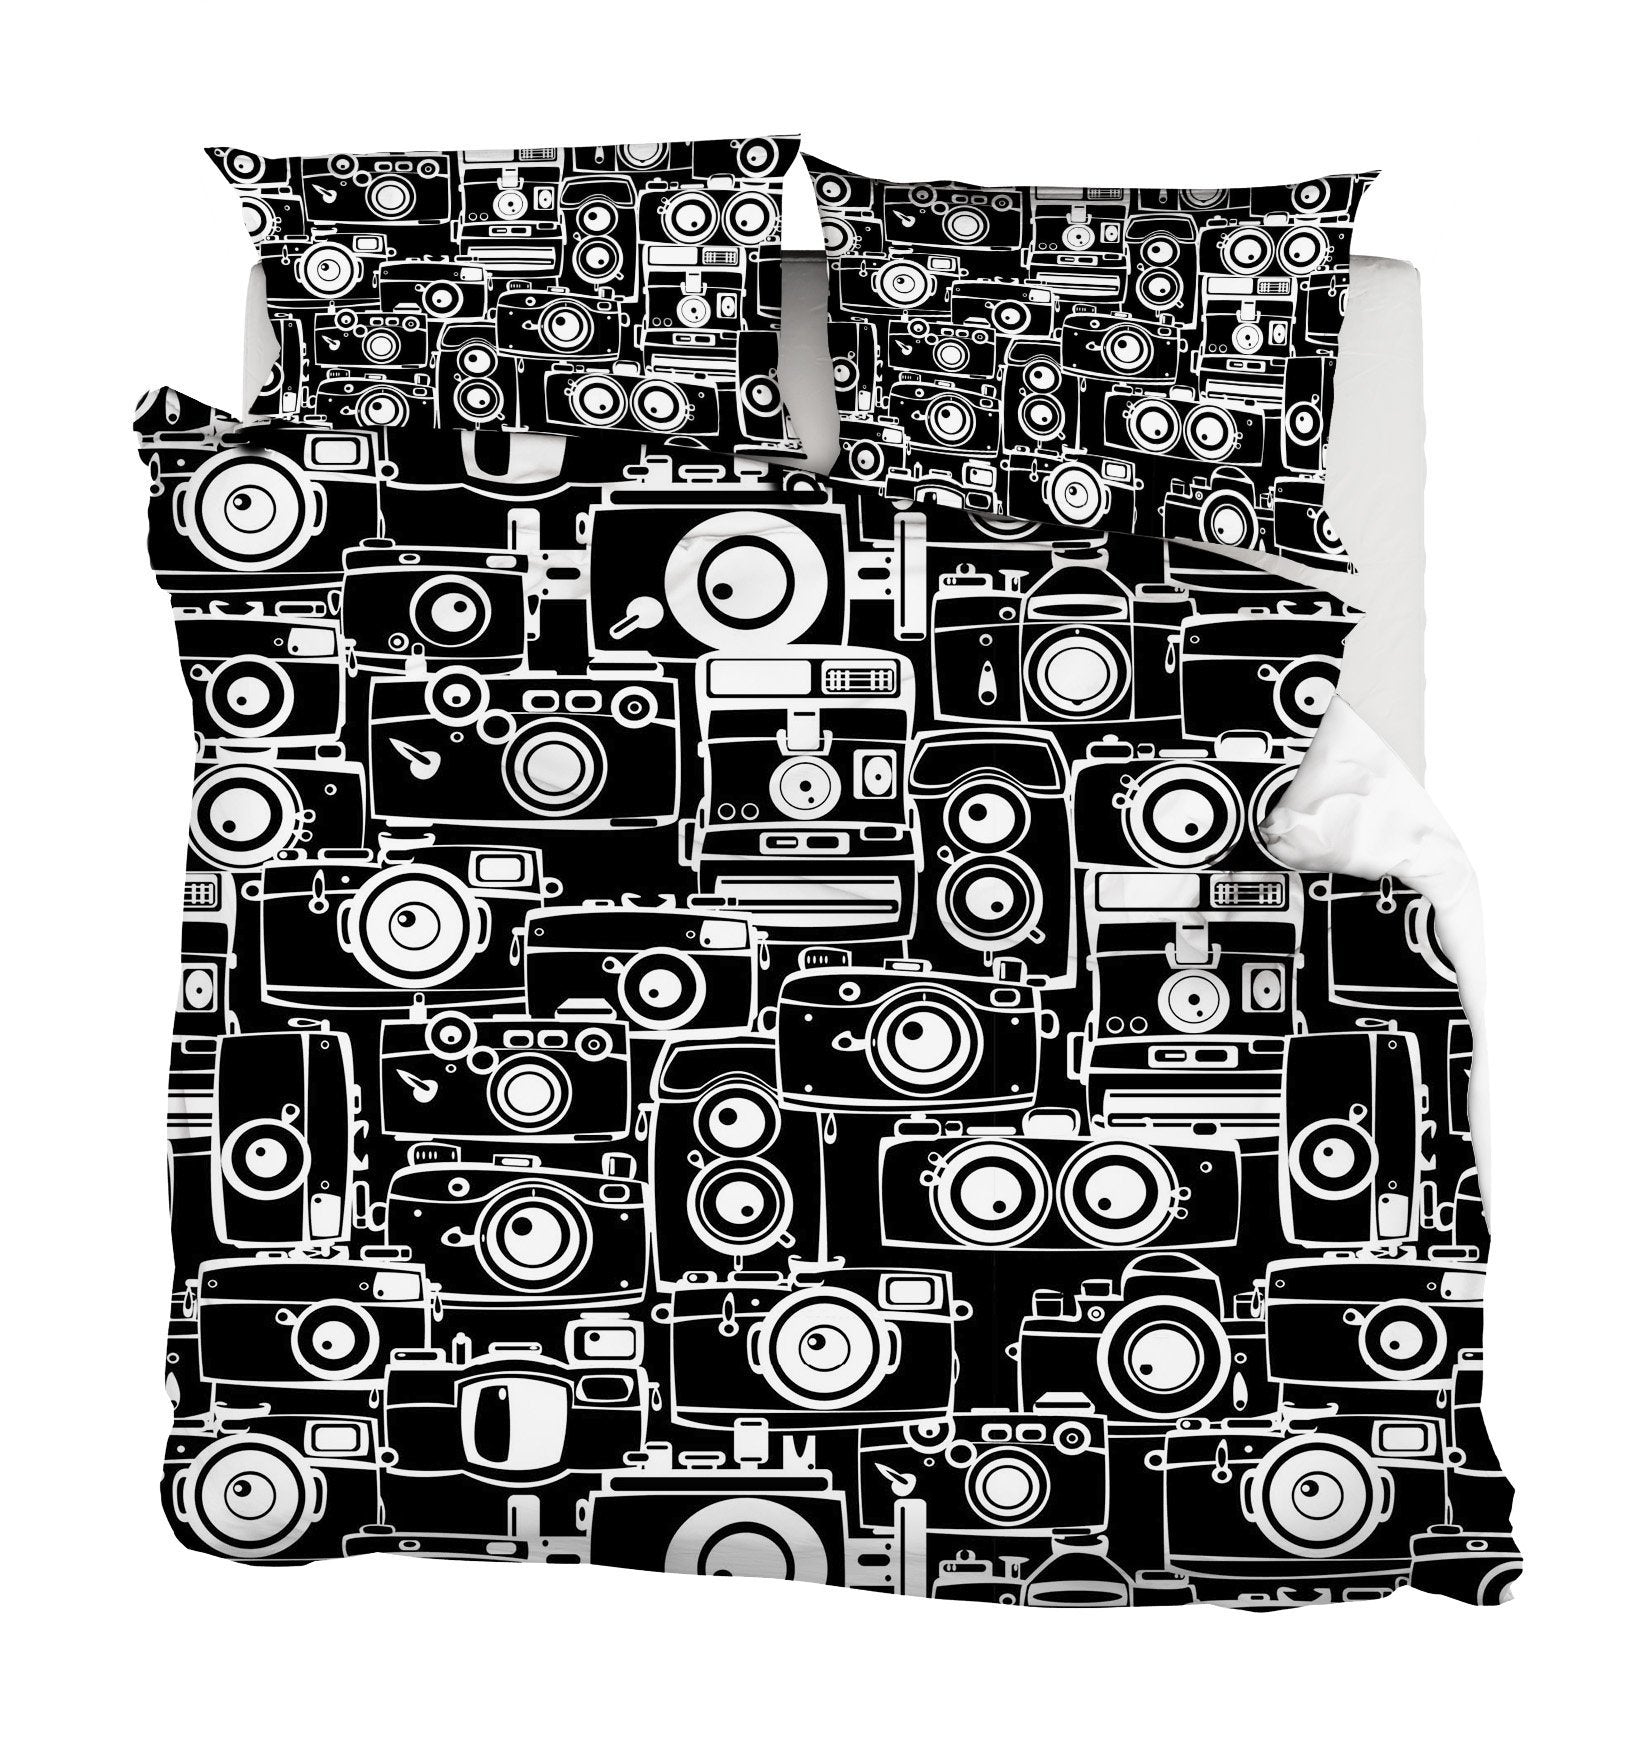 3D Telescope Black 025 Bed Pillowcases Quilt Wallpaper AJ Wallpaper 